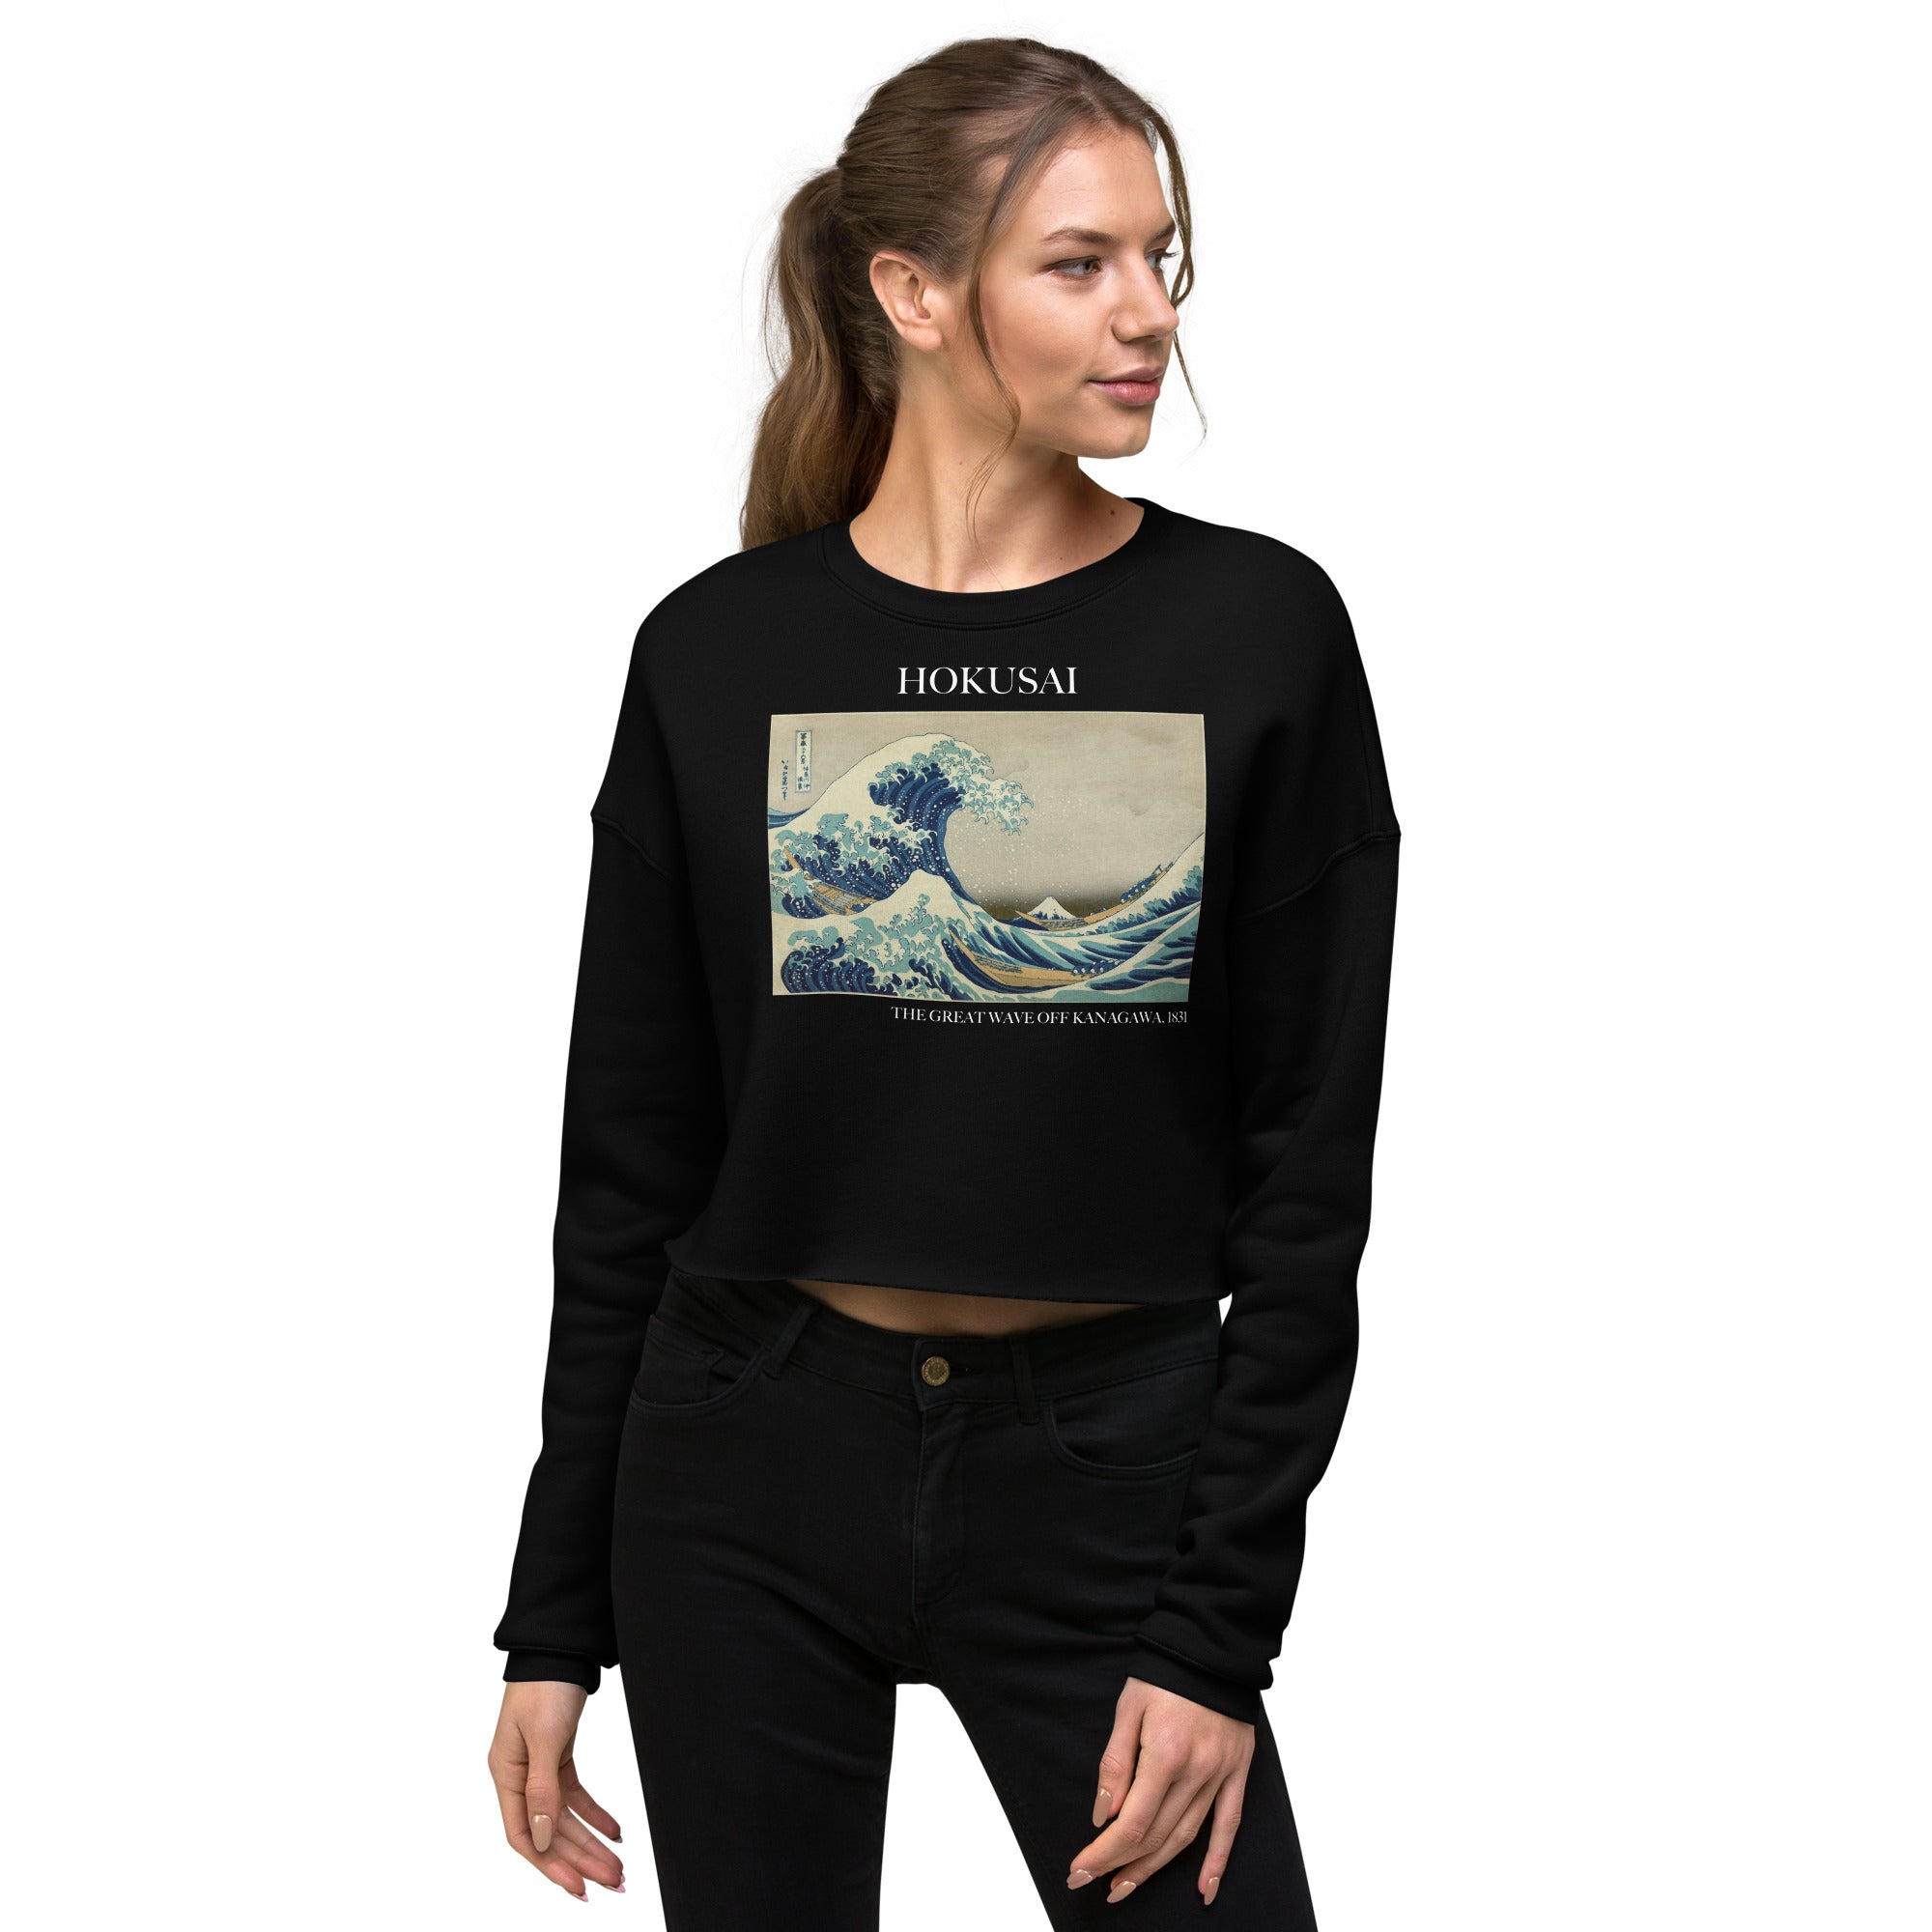 Hokusai 'The Great Wave off Kanagawa' Famous Painting Cropped Sweatshirt | Premium Art Cropped Sweatshirt